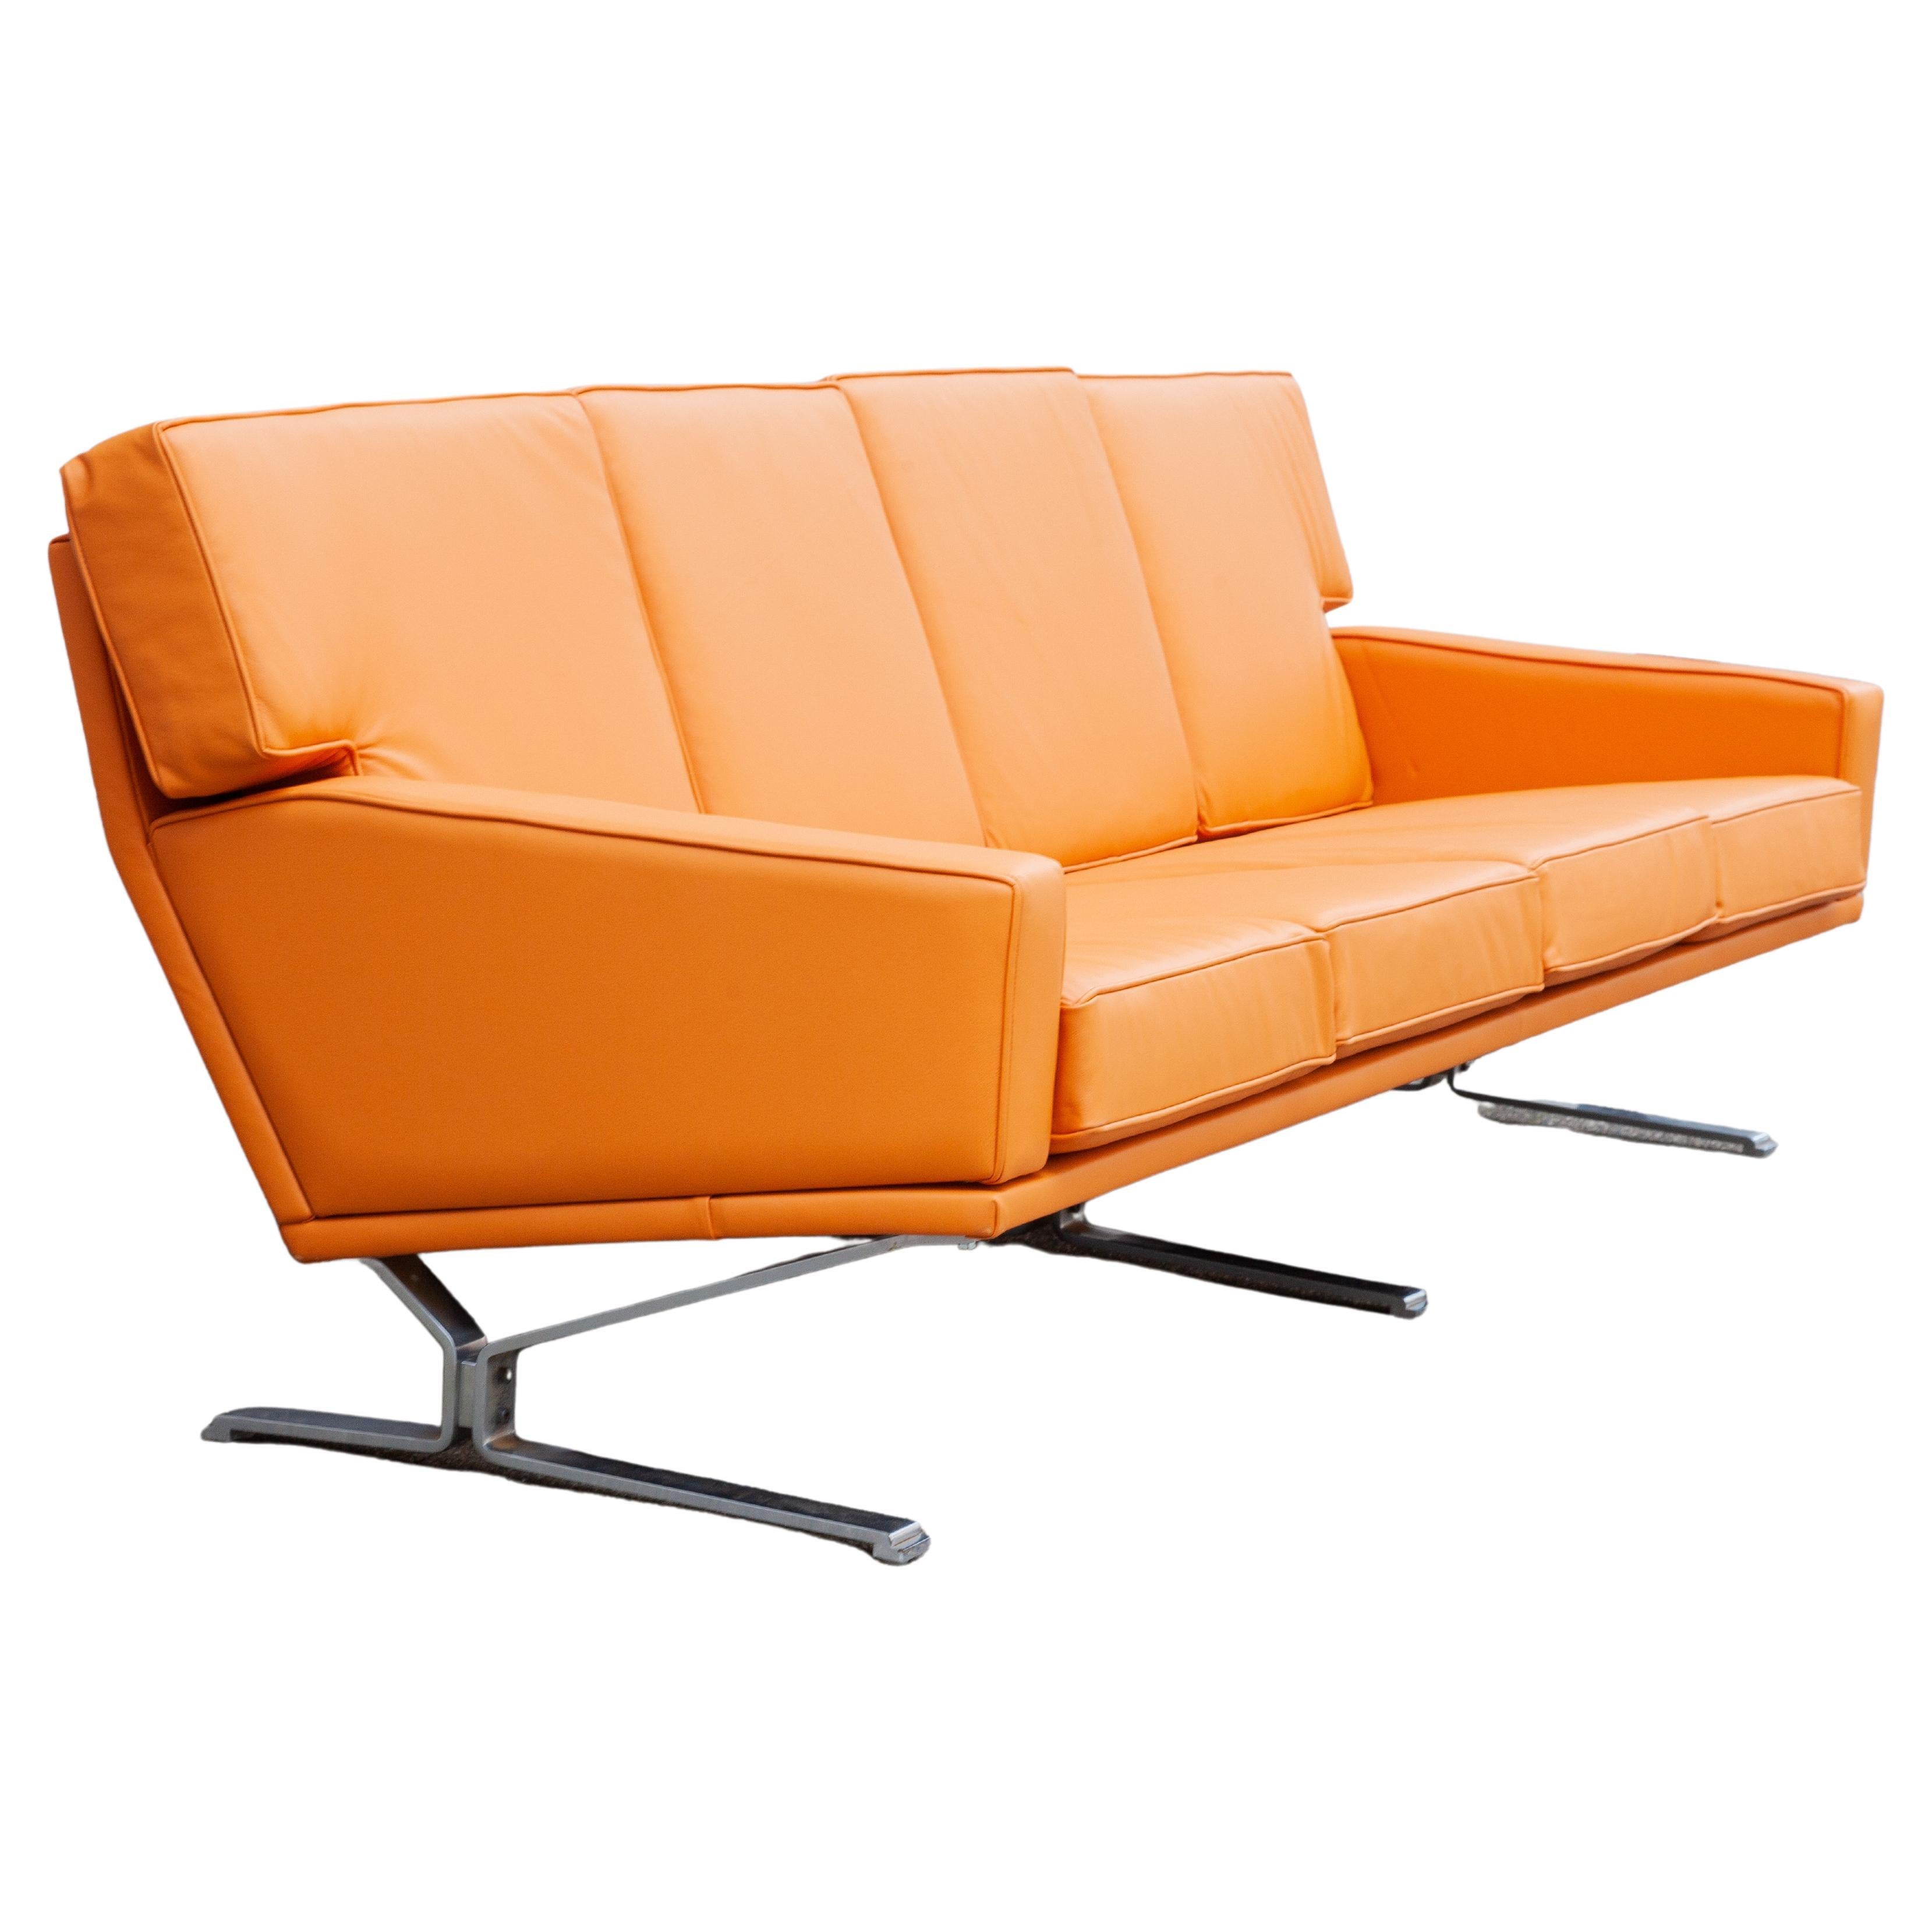 Midcentury Modern Cognac Color Four-Seat Sofa, Living Roomset, 1960s, Denmark For Sale